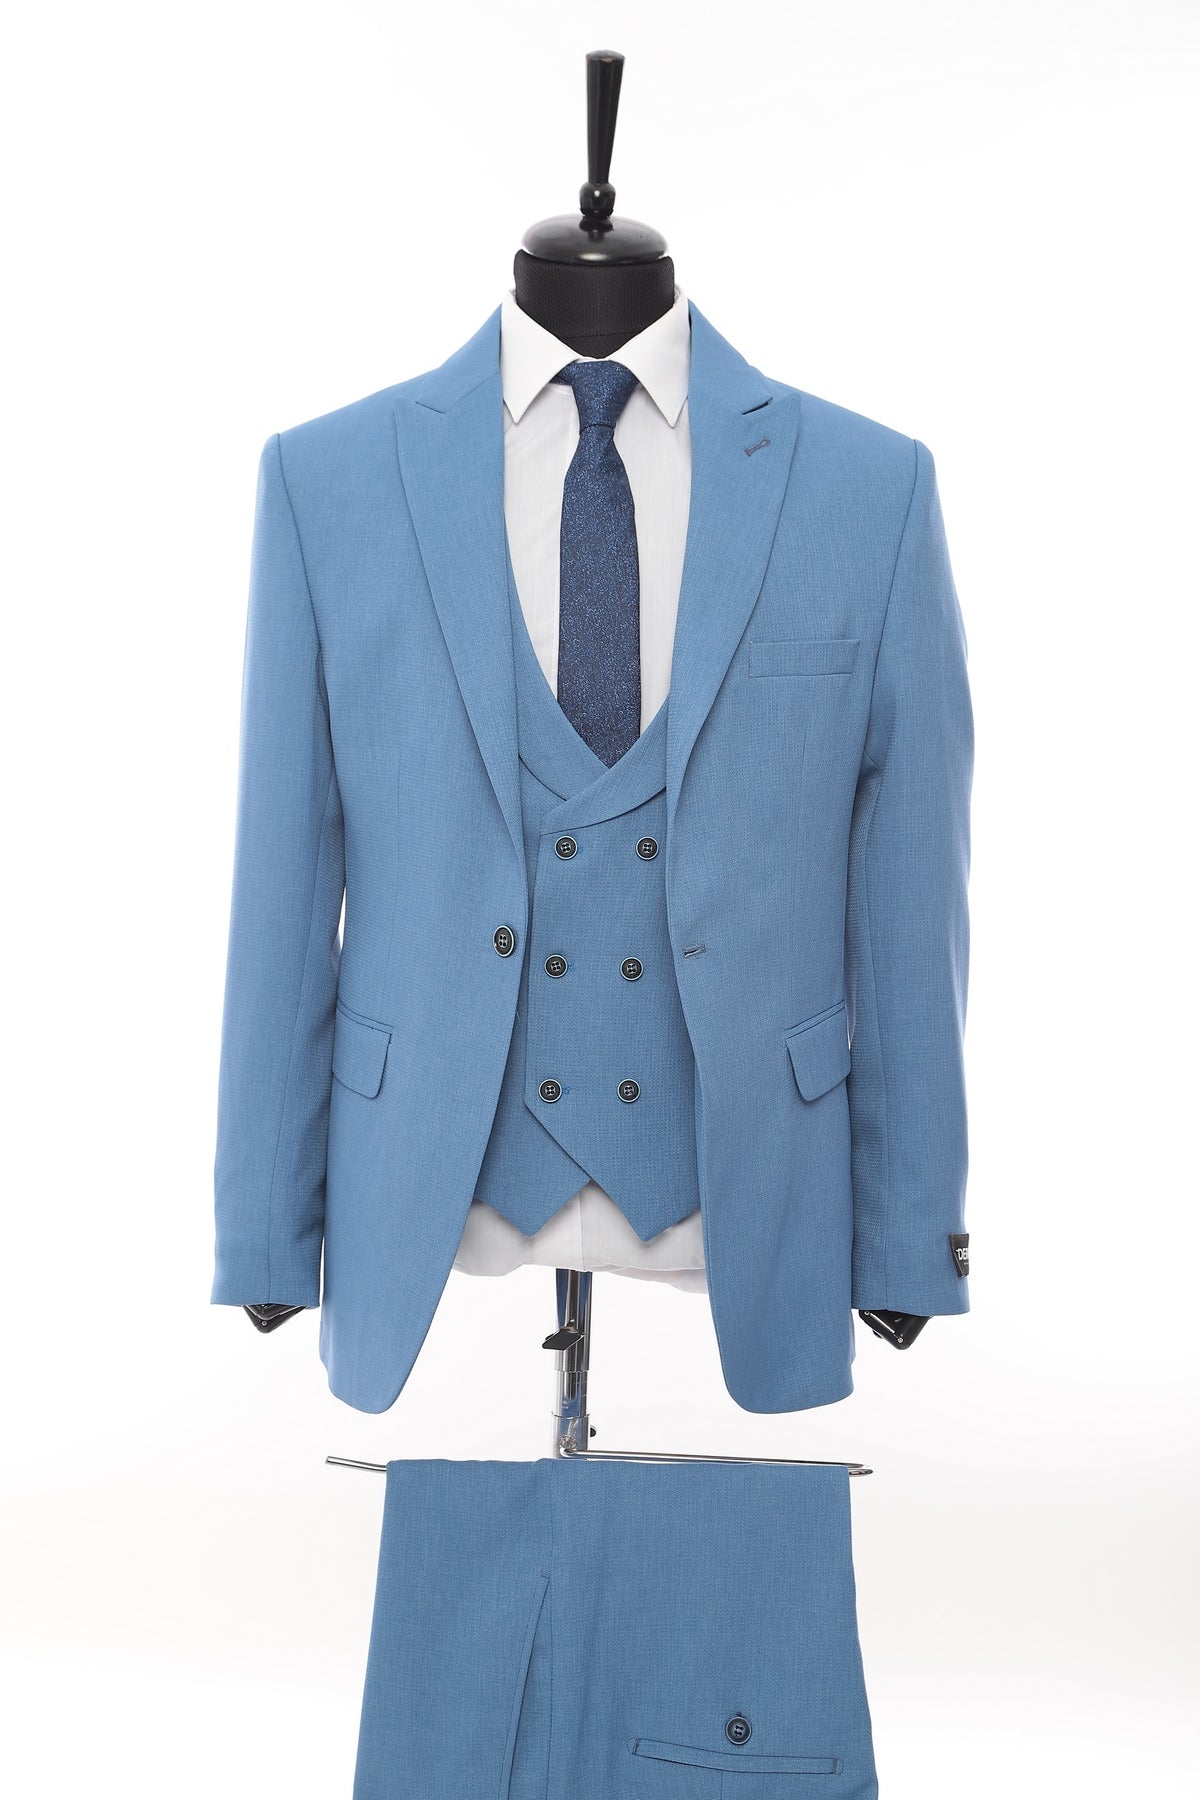 Sky Blue Patterned Fabric Luxury Suit 3 Pieces